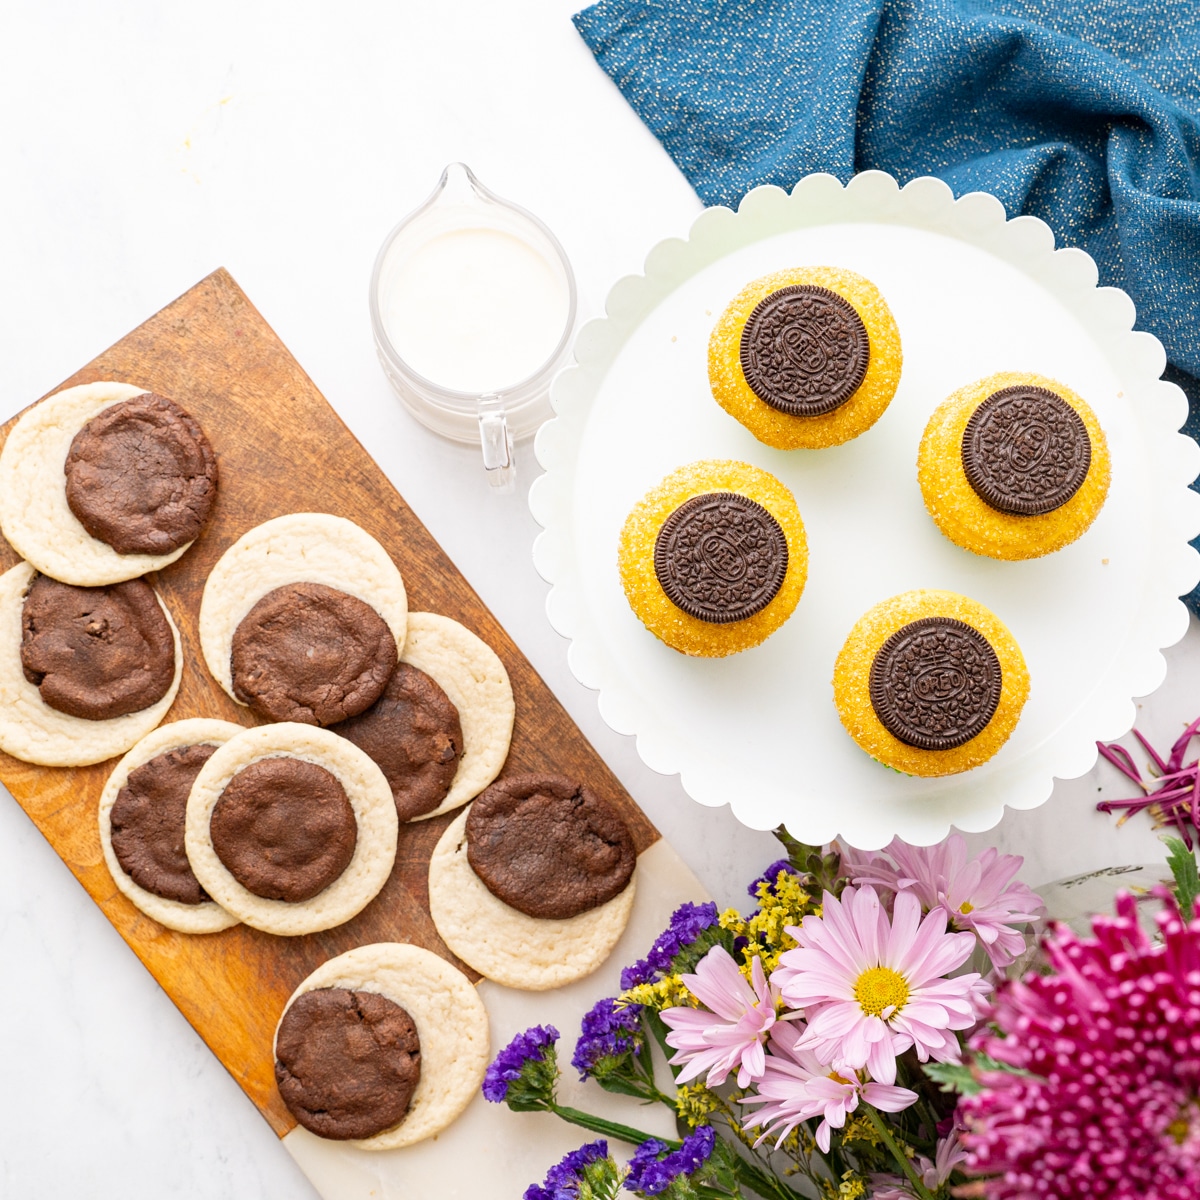 Solar Eclipse Cookies and Solar Eclipse Cupcakes (solar eclipse menu ideas)